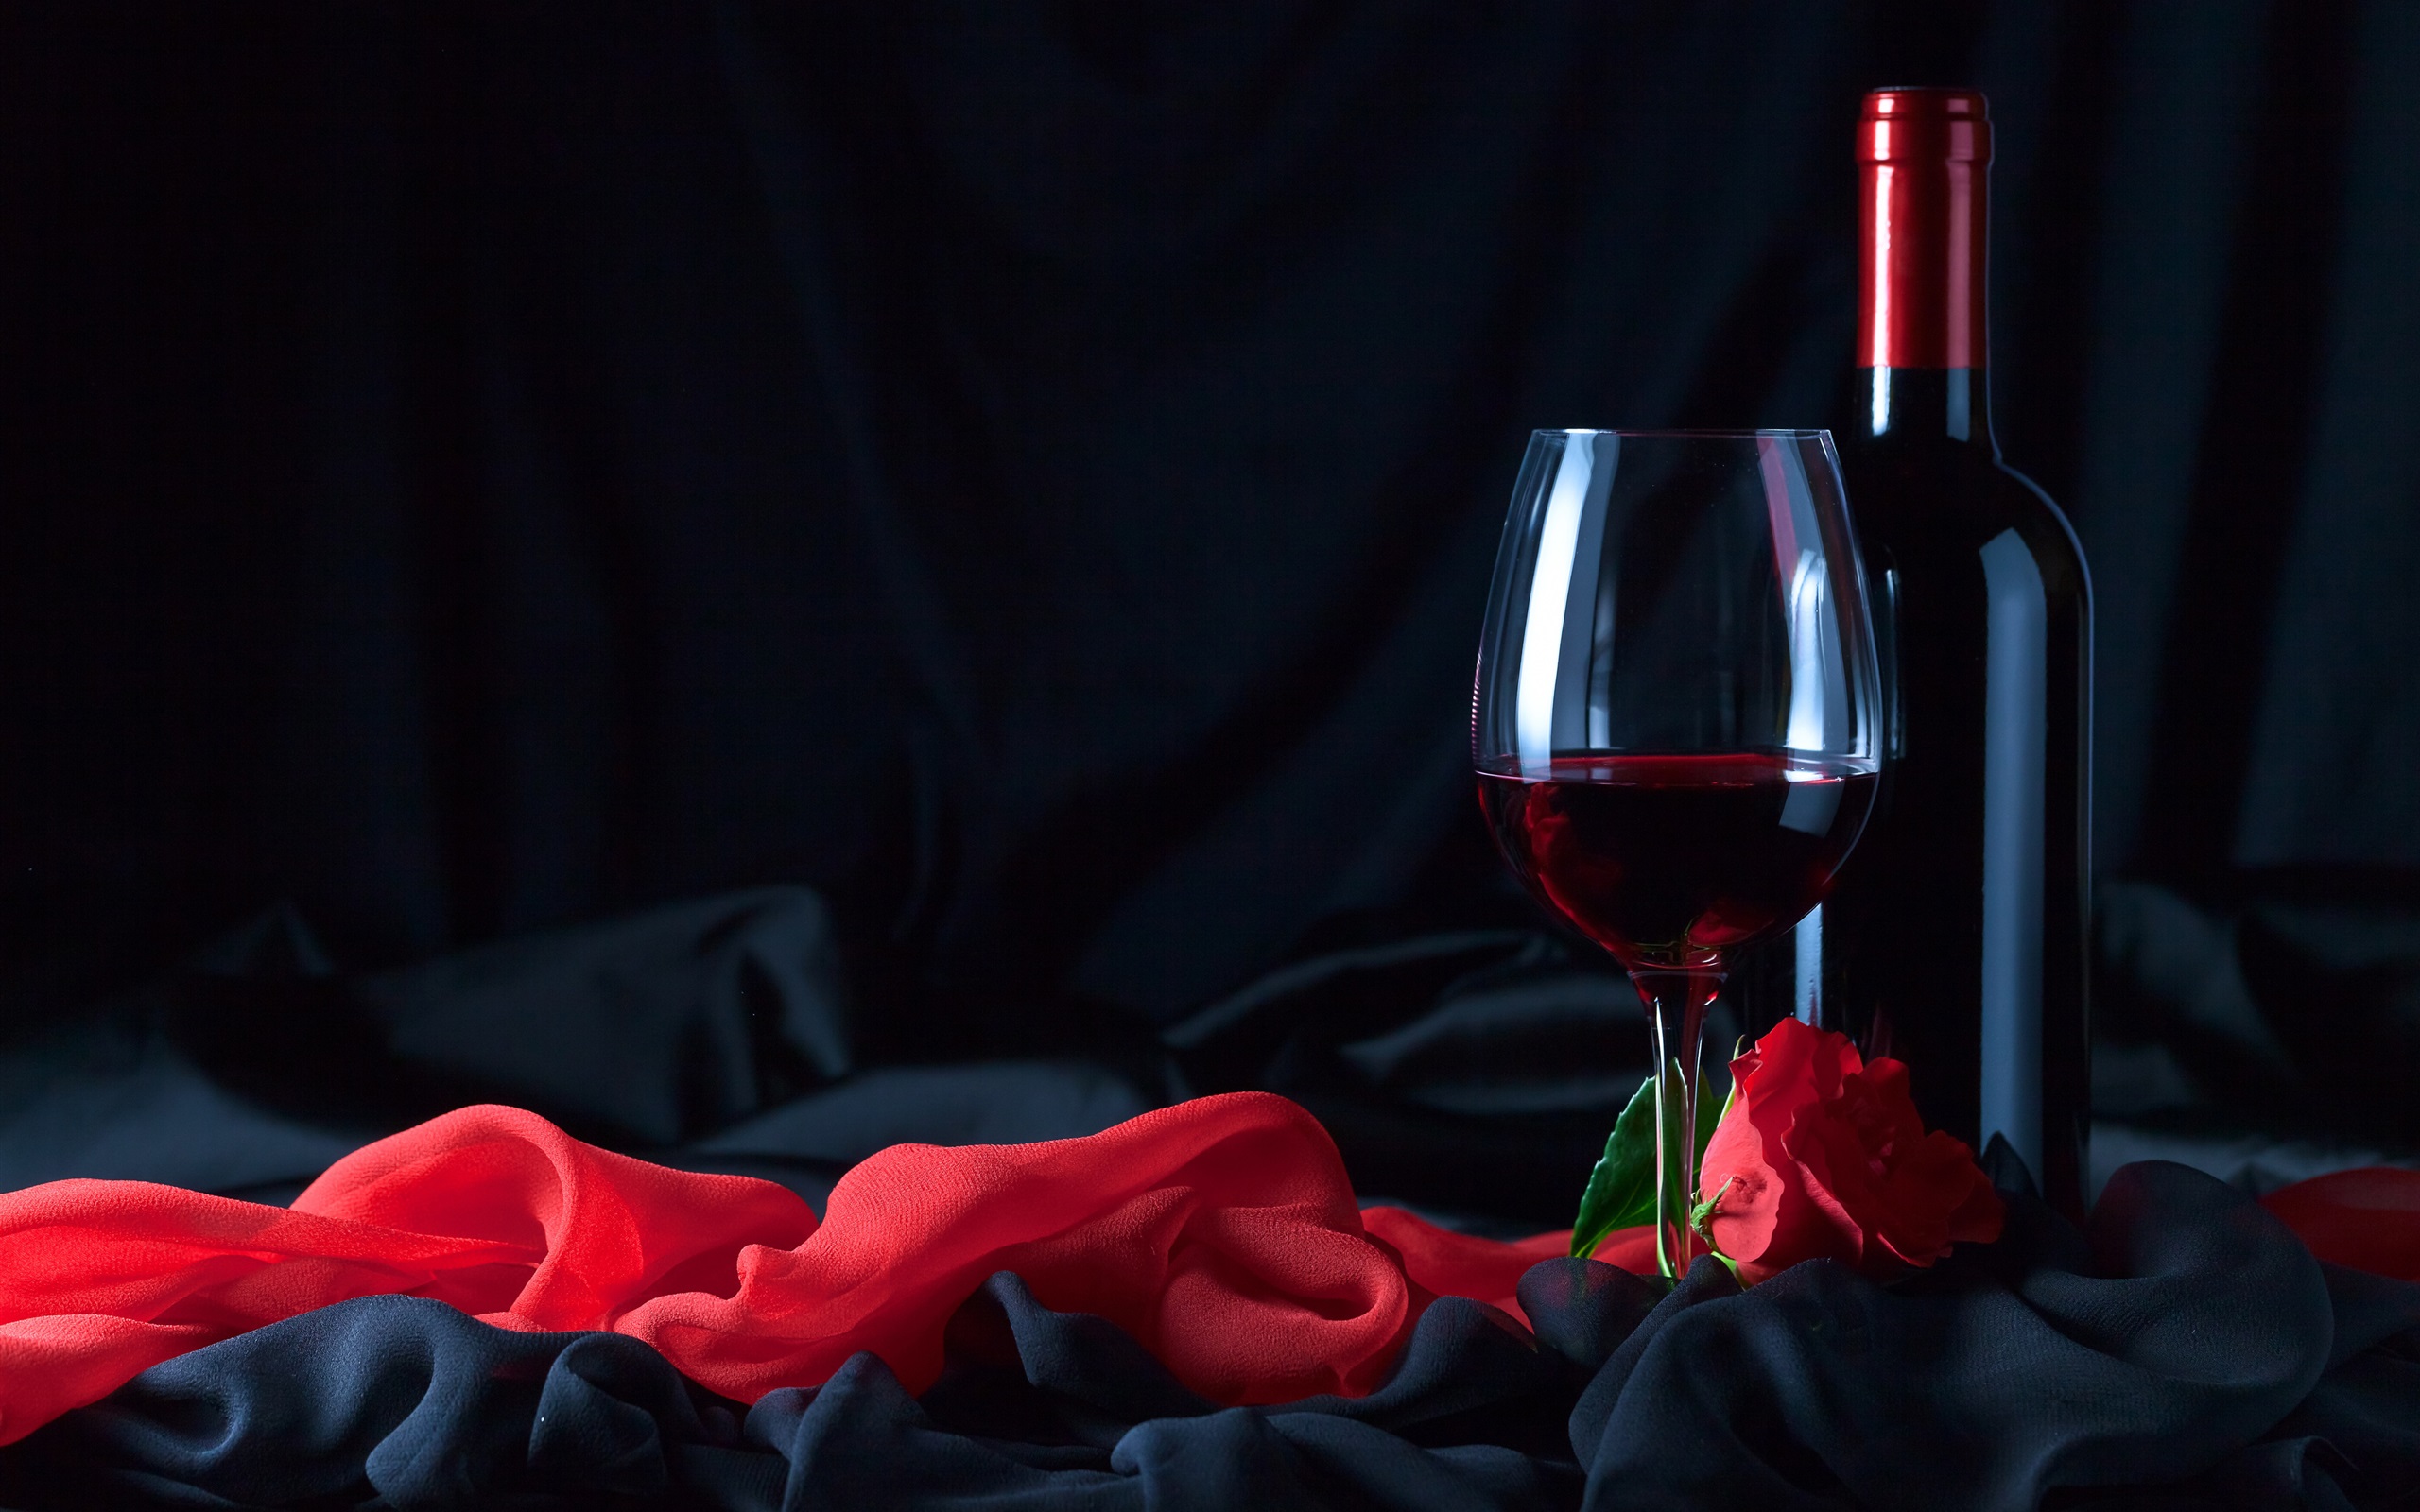 papel tapiz de copa de vino,rojo,copa de vino,copas,vino tinto,fotografía de naturaleza muerta